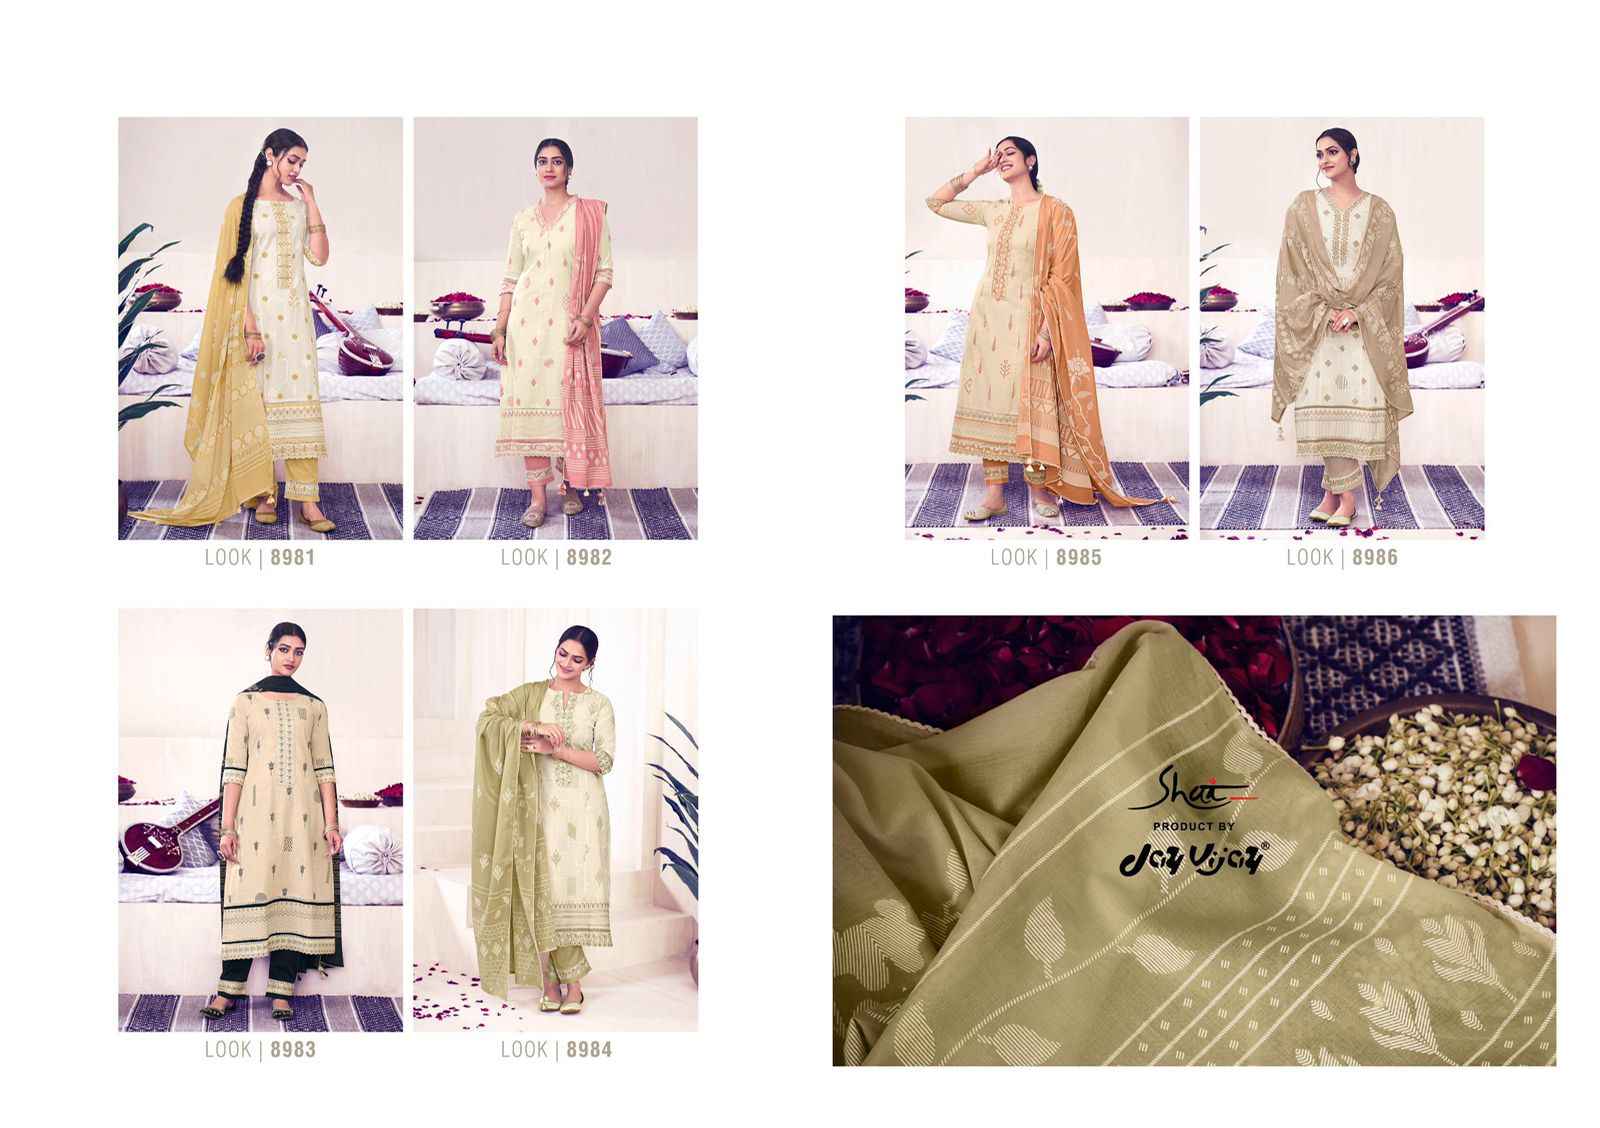 Jay Vijay Sitaar Pure Cotton Dress Material (6 pcs Catalogue)